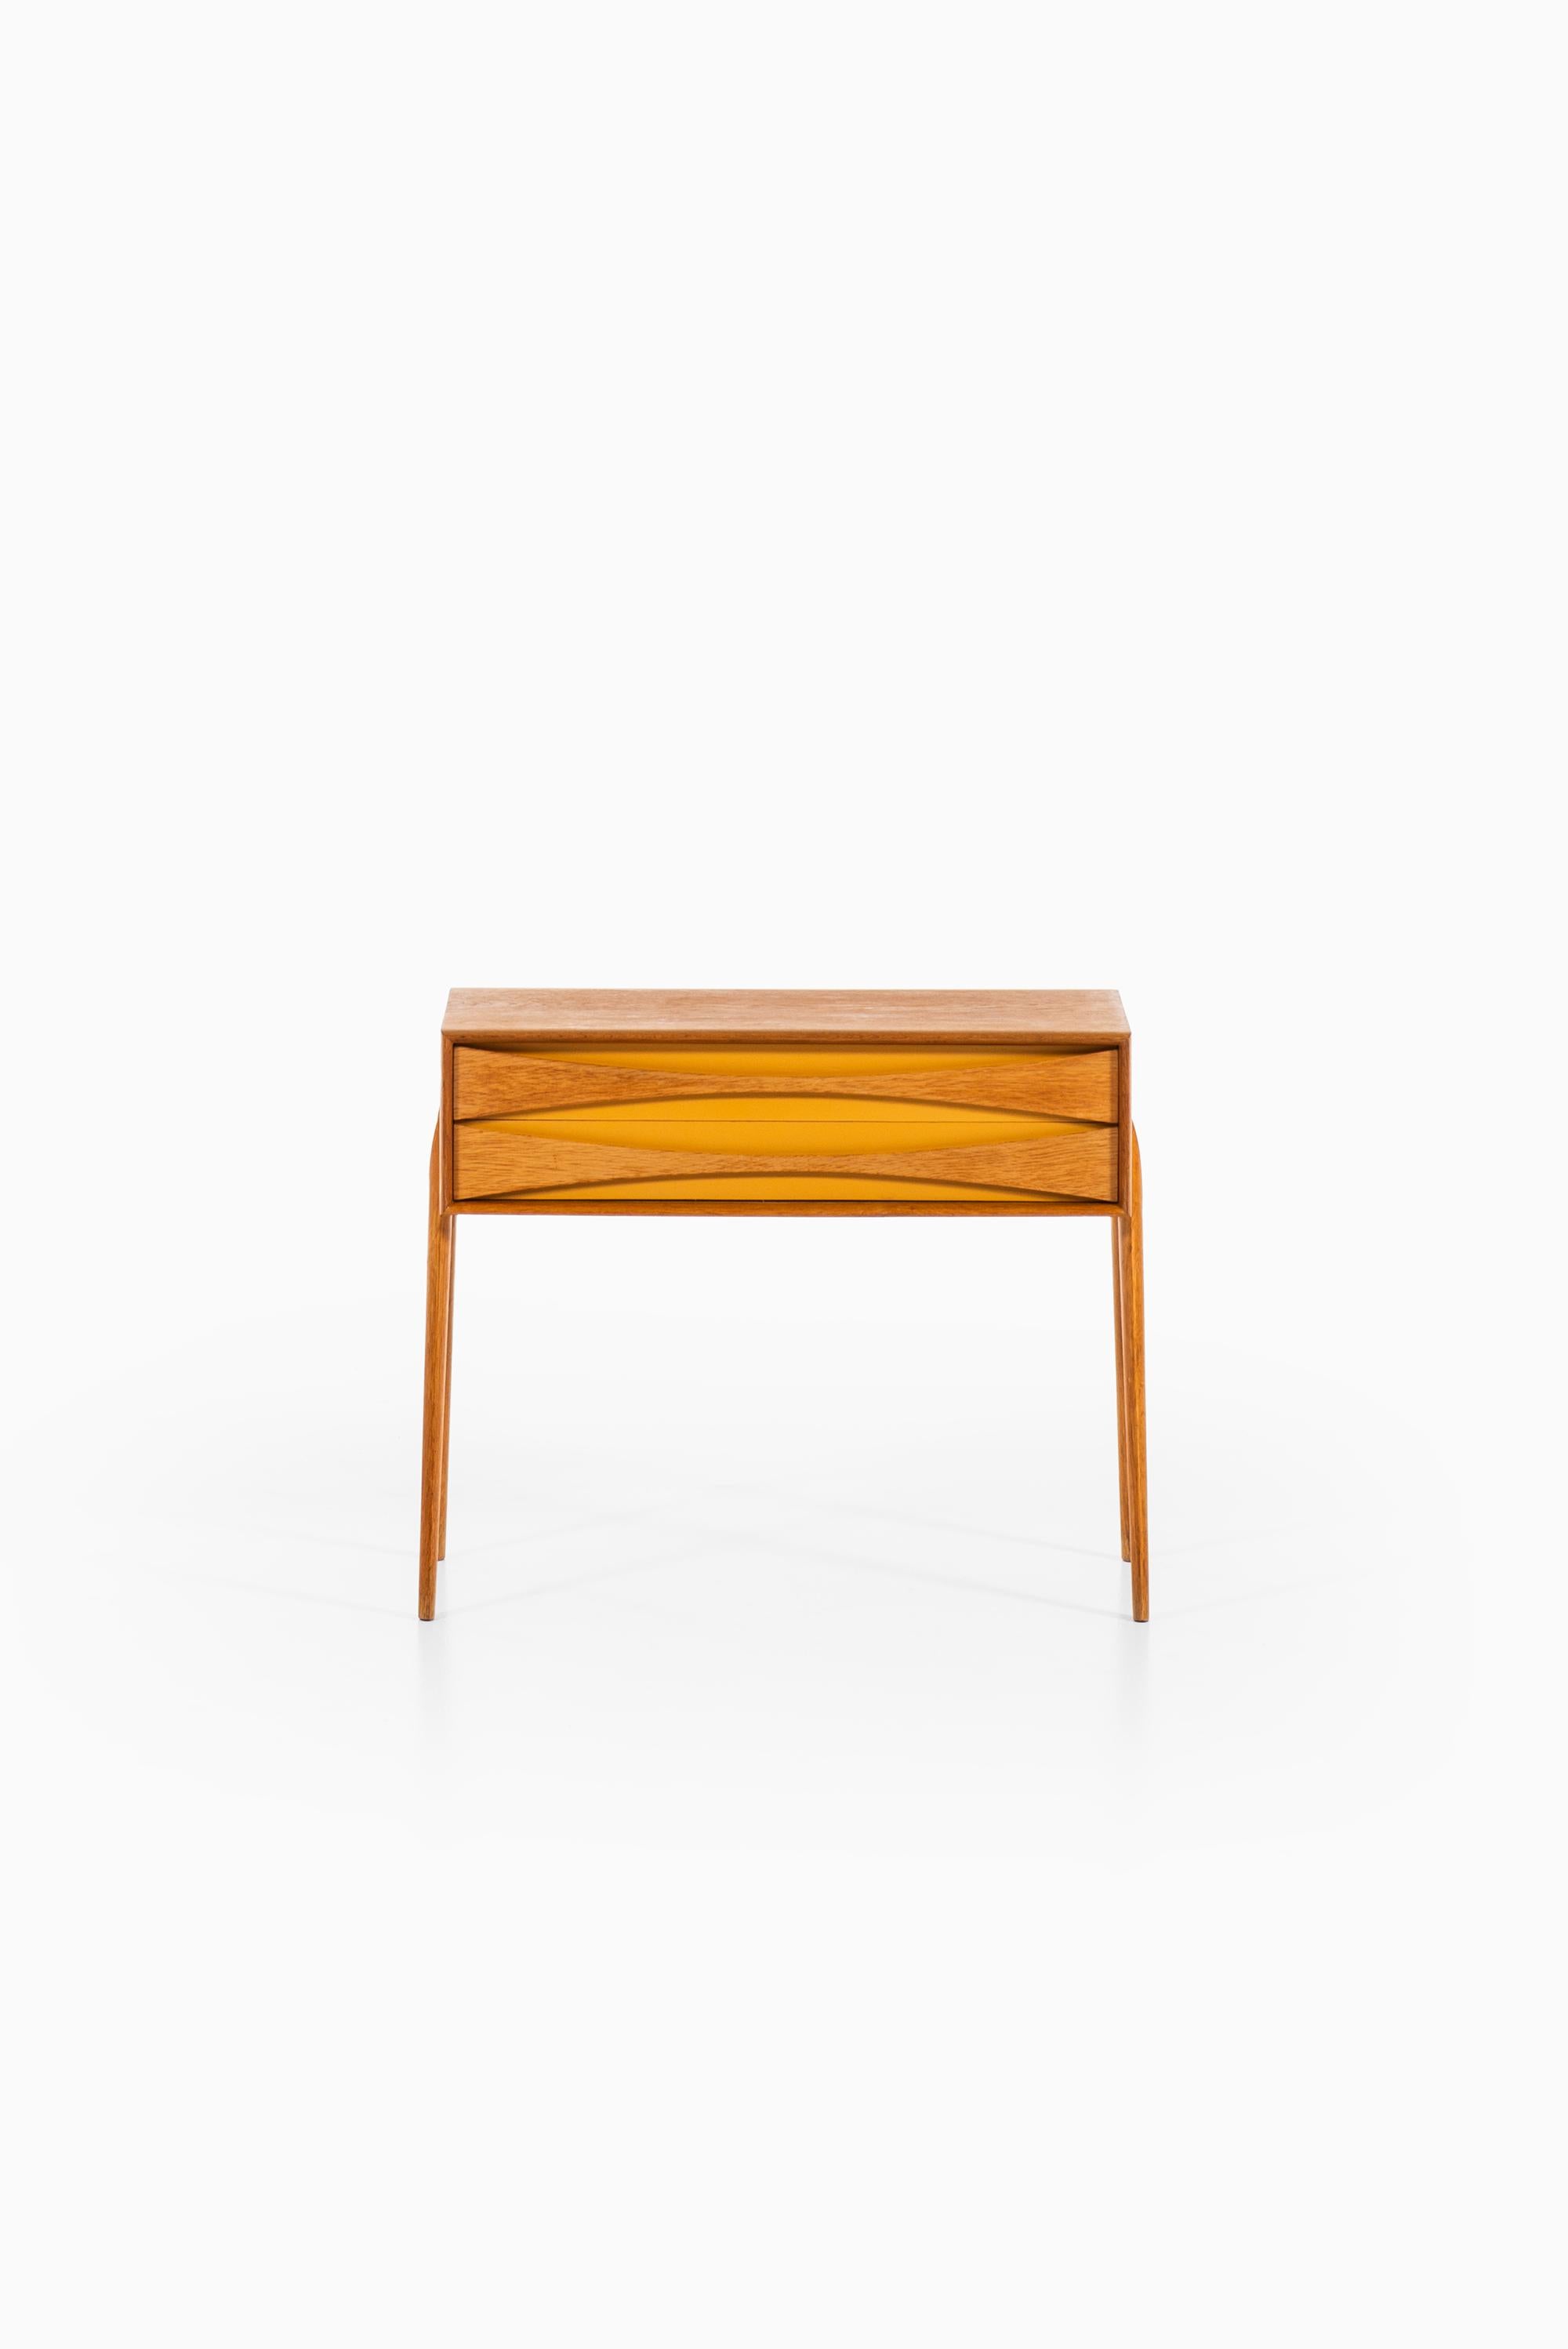 Rare side table / bedside table designed by Rimbert Sandholt. Produced by Glas & Trä Hovmantorp in Sweden.